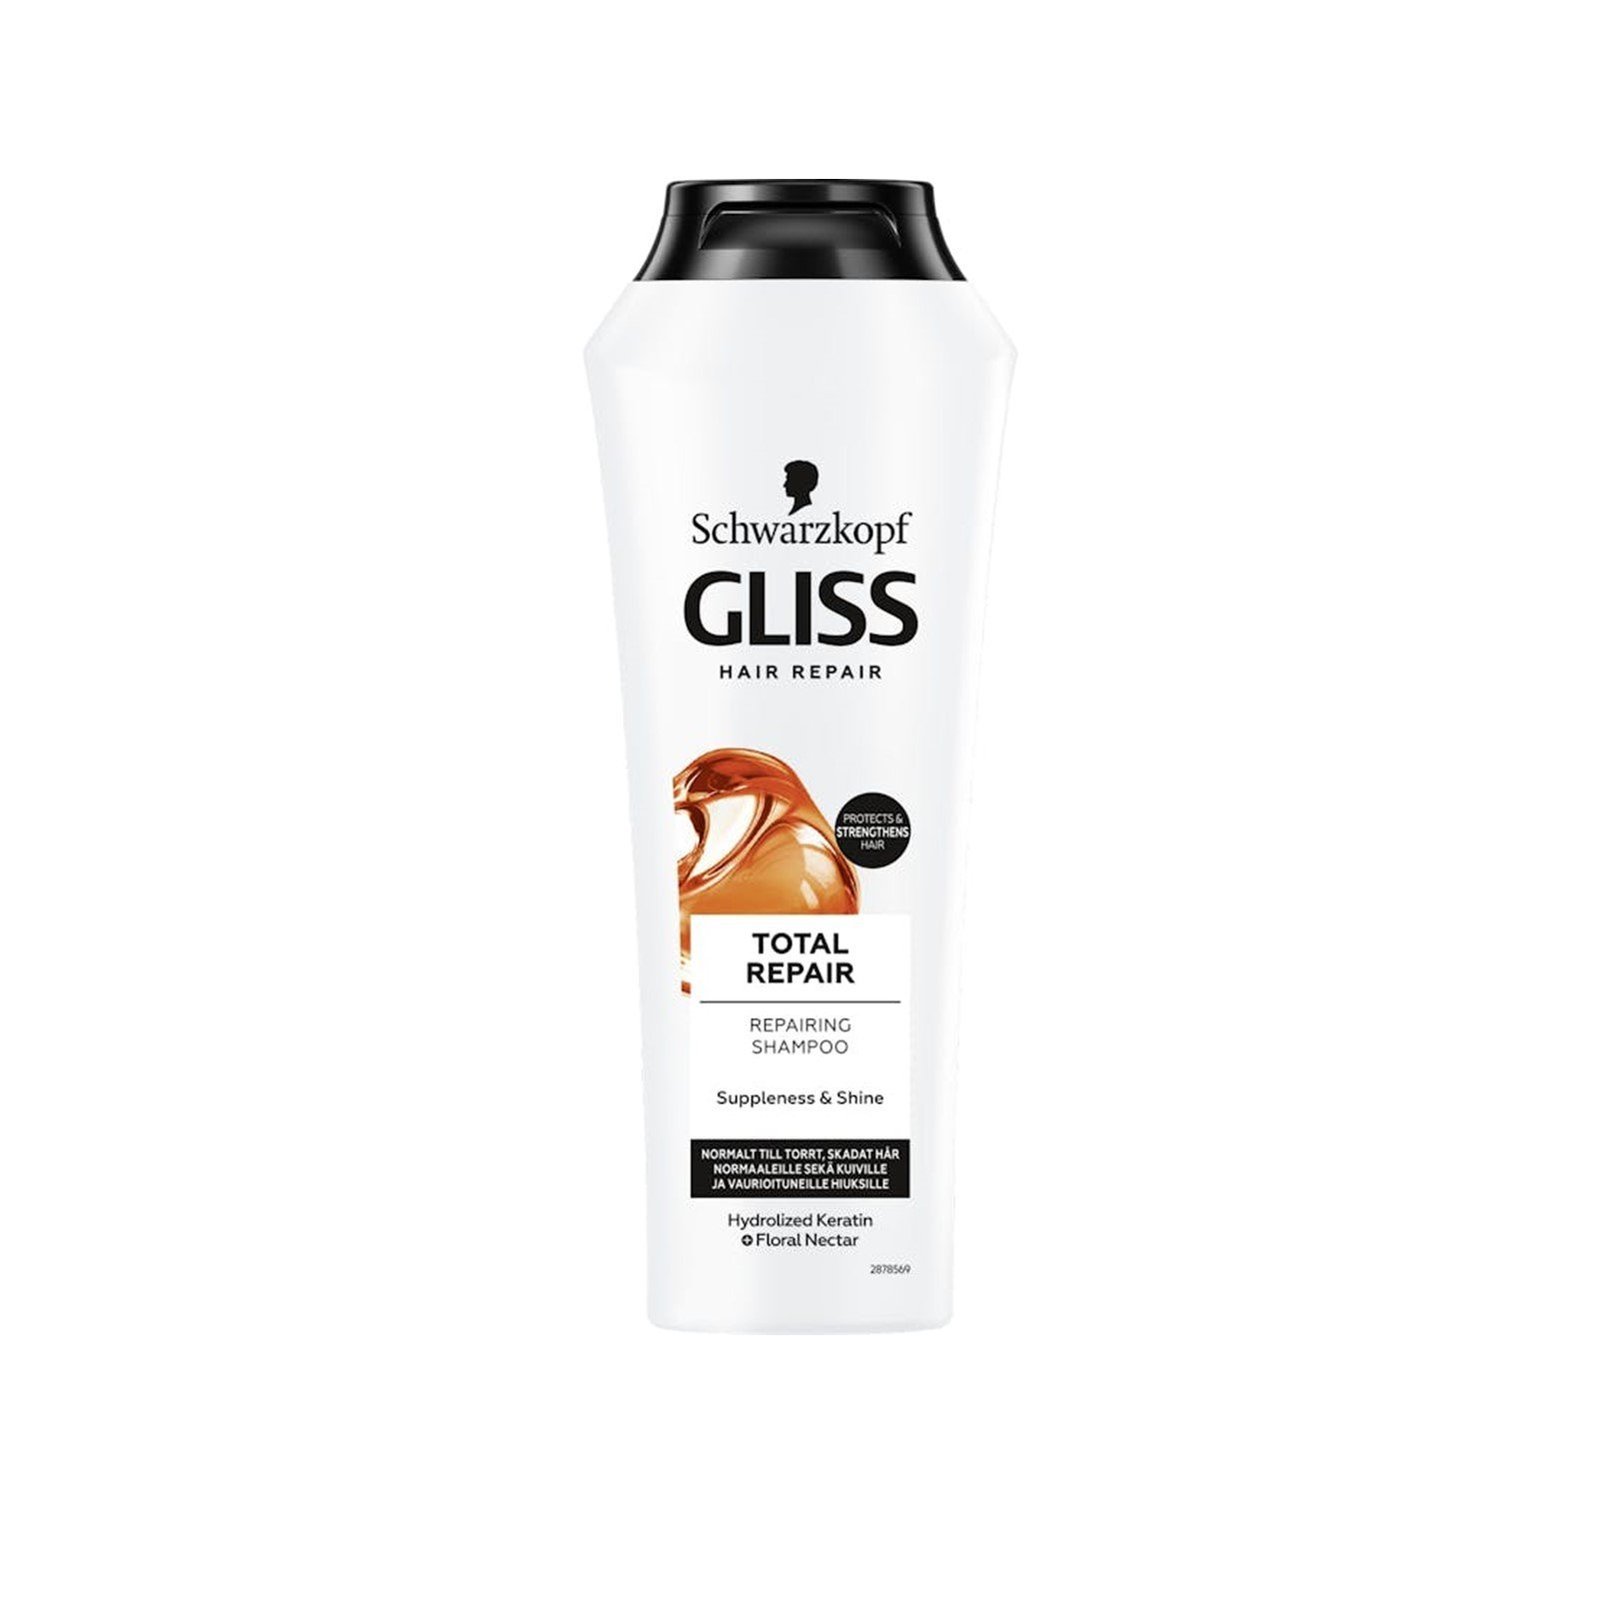 Schwarzkopf Gliss Total Repair Shampoo 370ml (12.51fl oz)